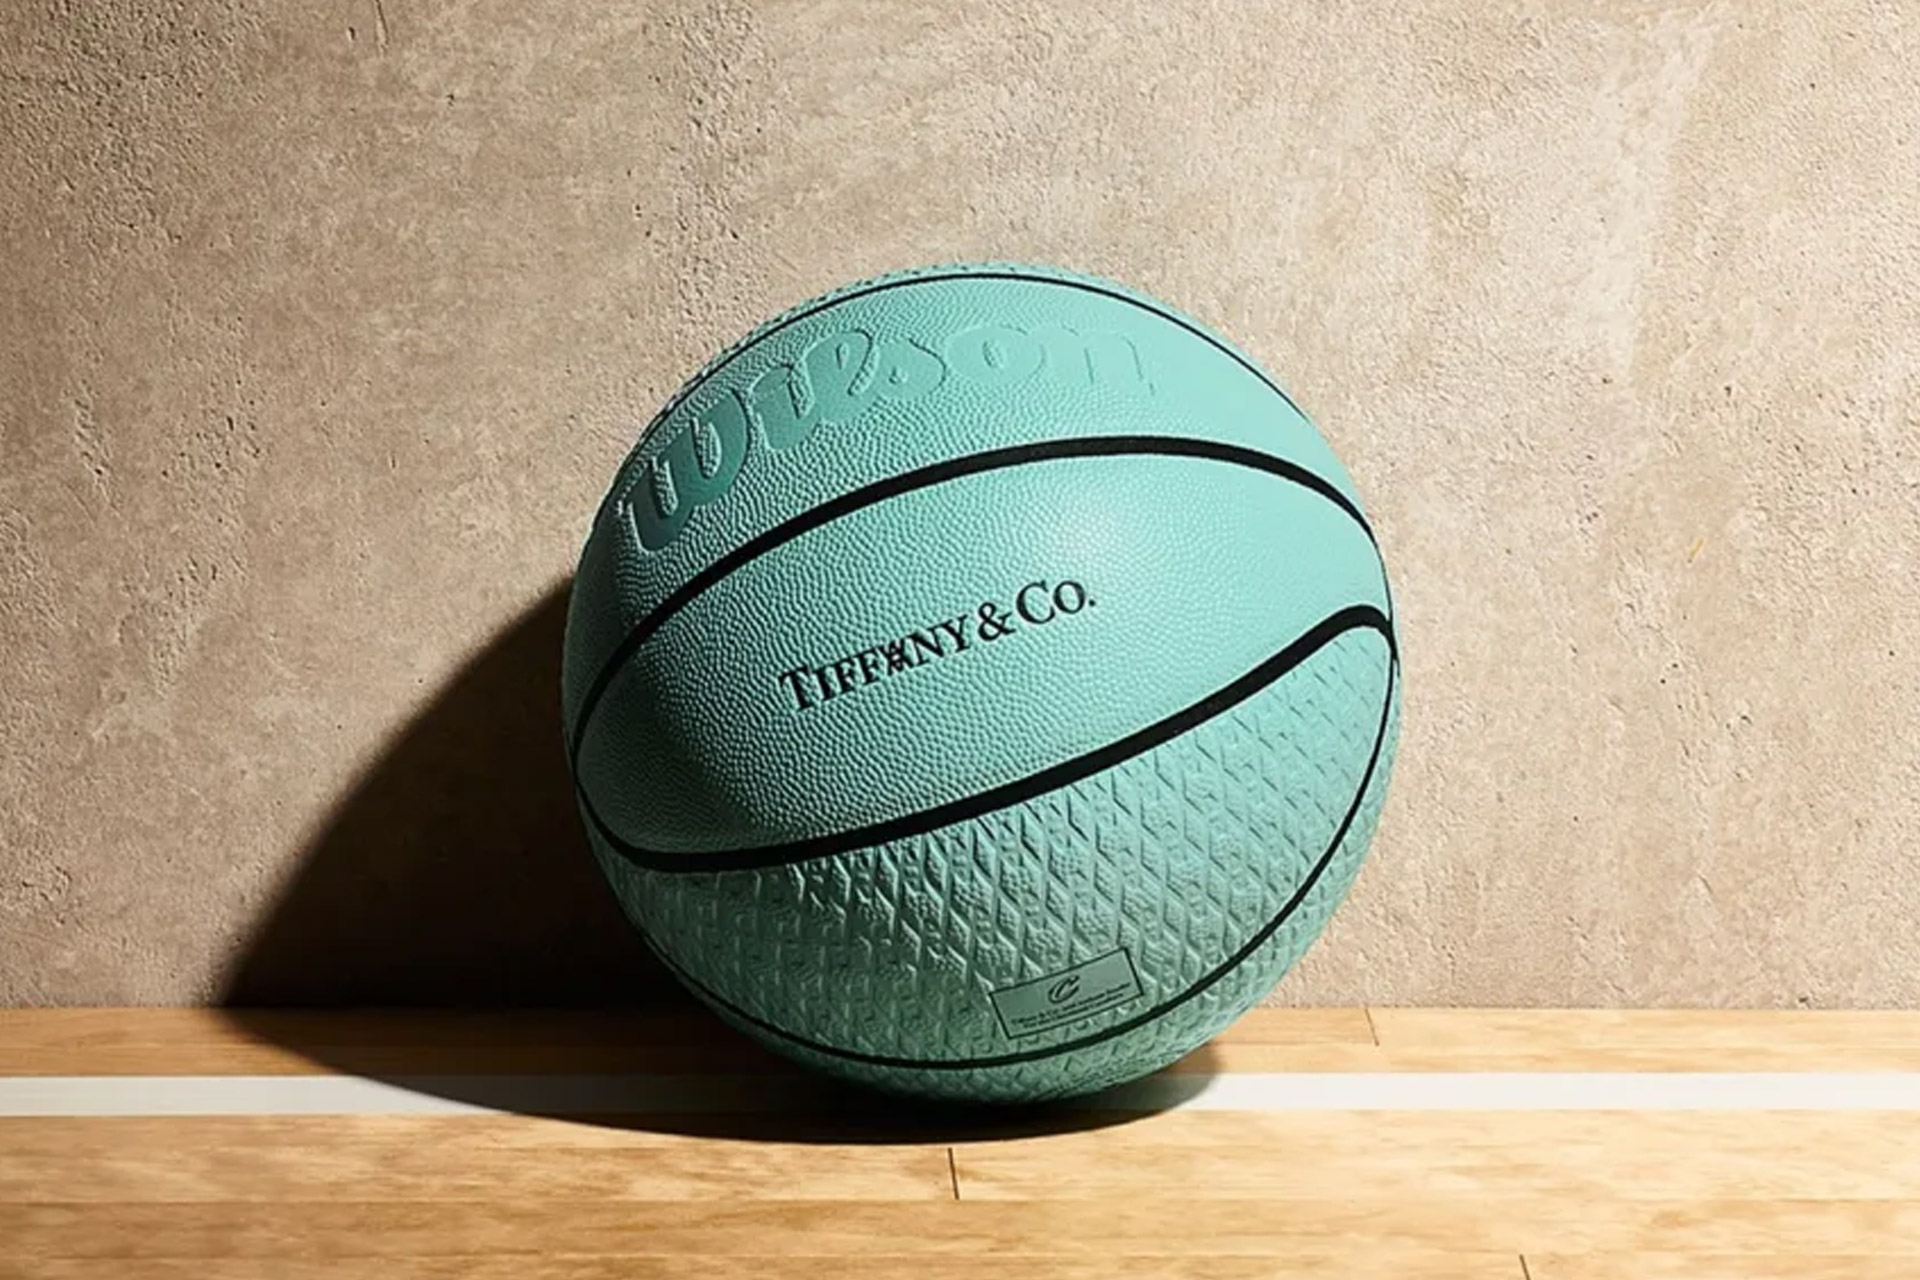 Tiffany & Co. x Arsham Studio NBA Basketball